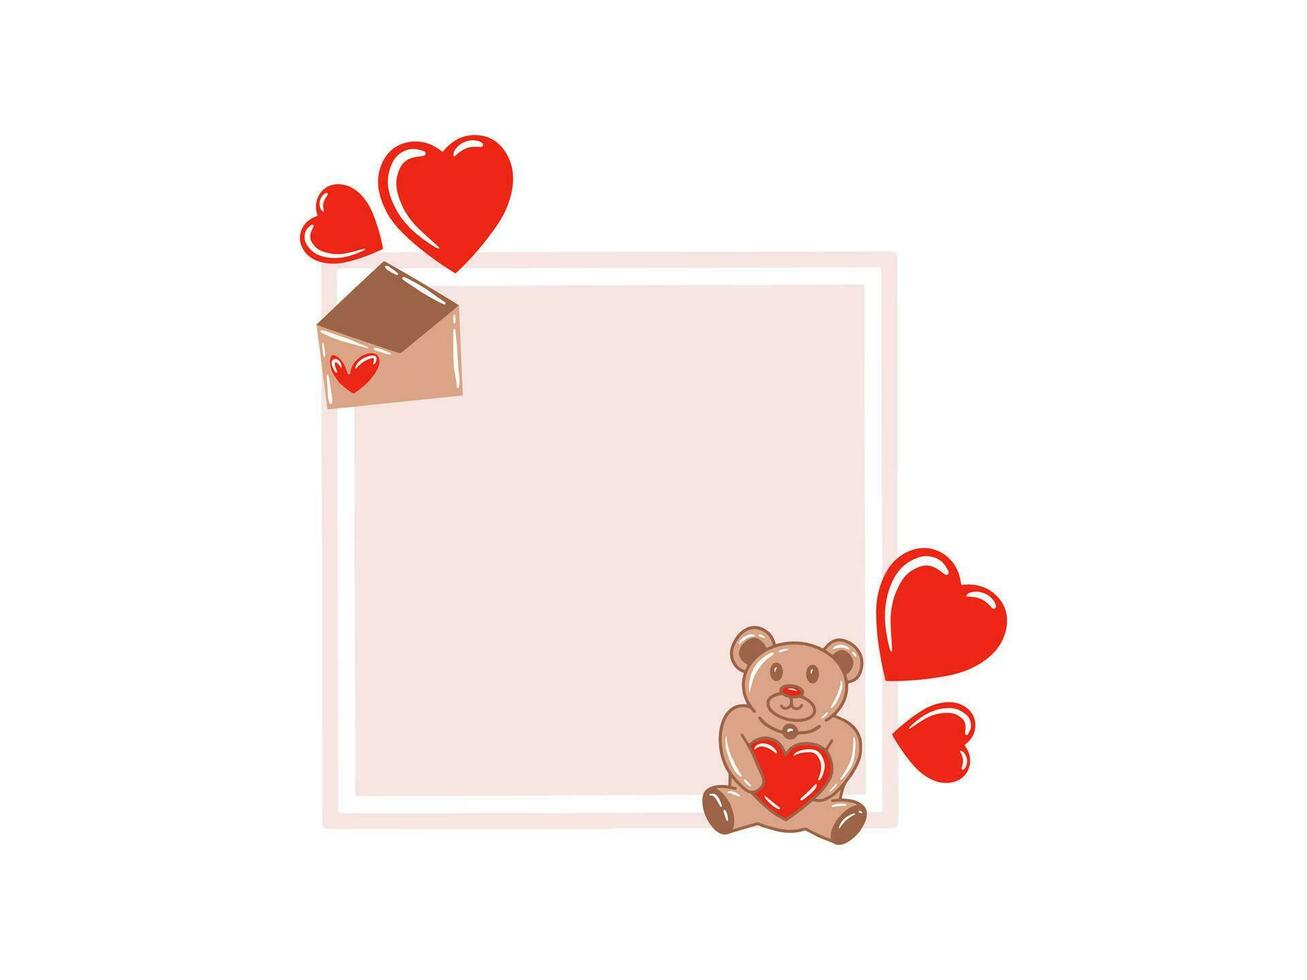 Valentijn kader hart achtergrond illustratie vector